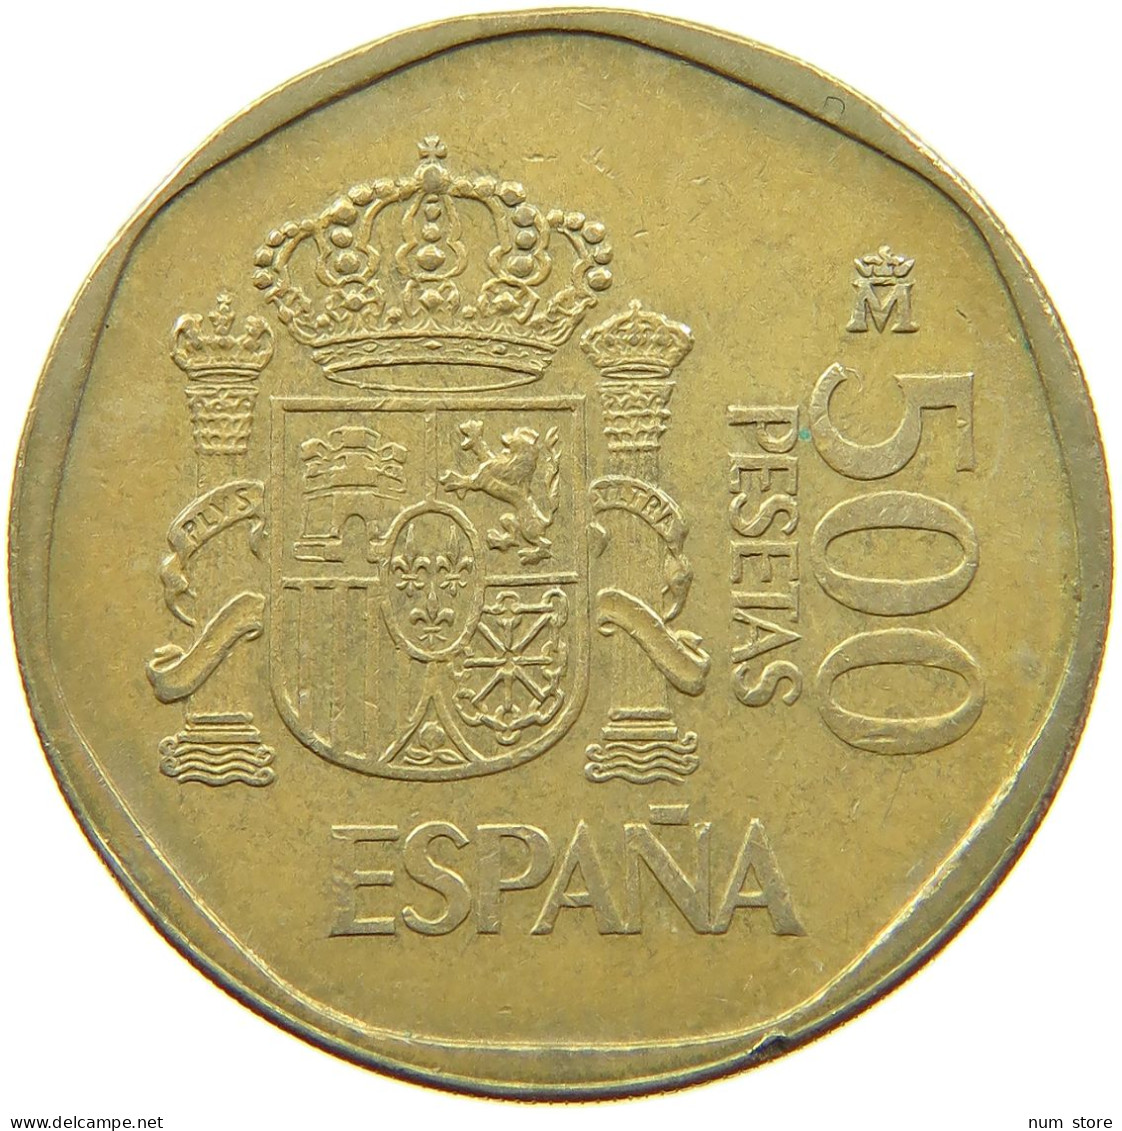 SPAIN 500 PESETAS 1989 #a033 0817 - 500 Pesetas